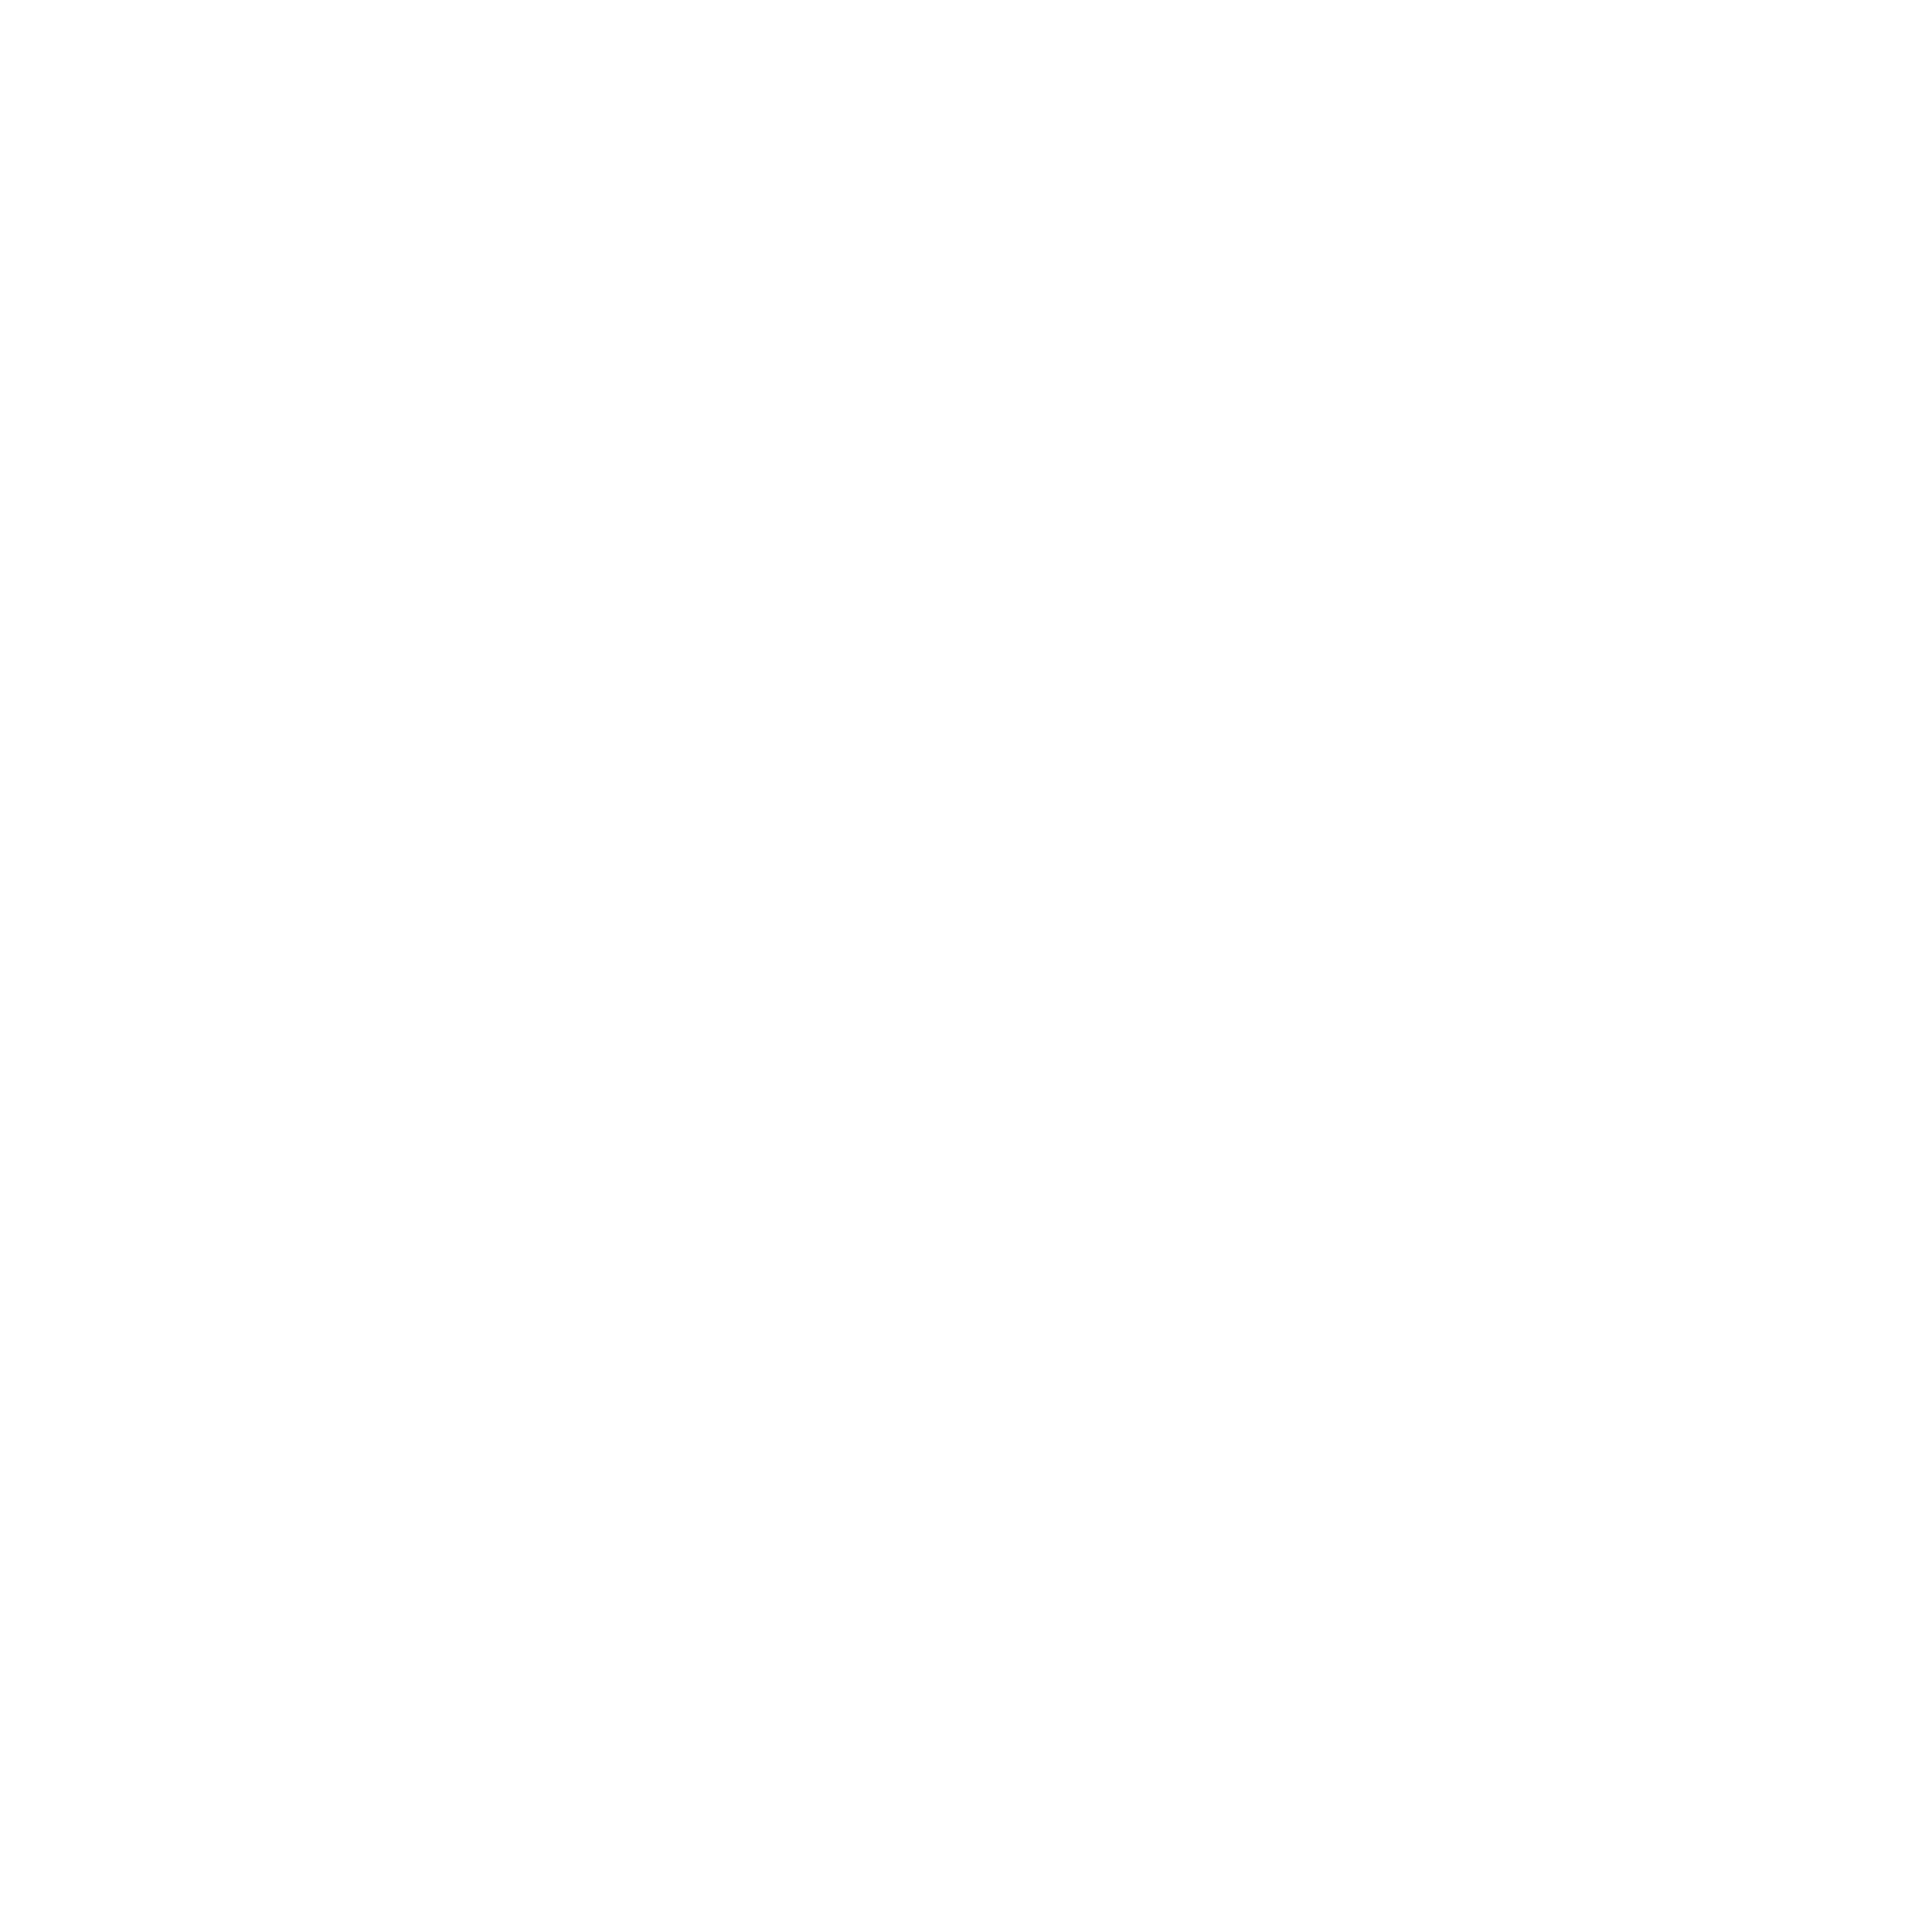 Square D Logo - Square D Logo PNG Transparent & SVG Vector